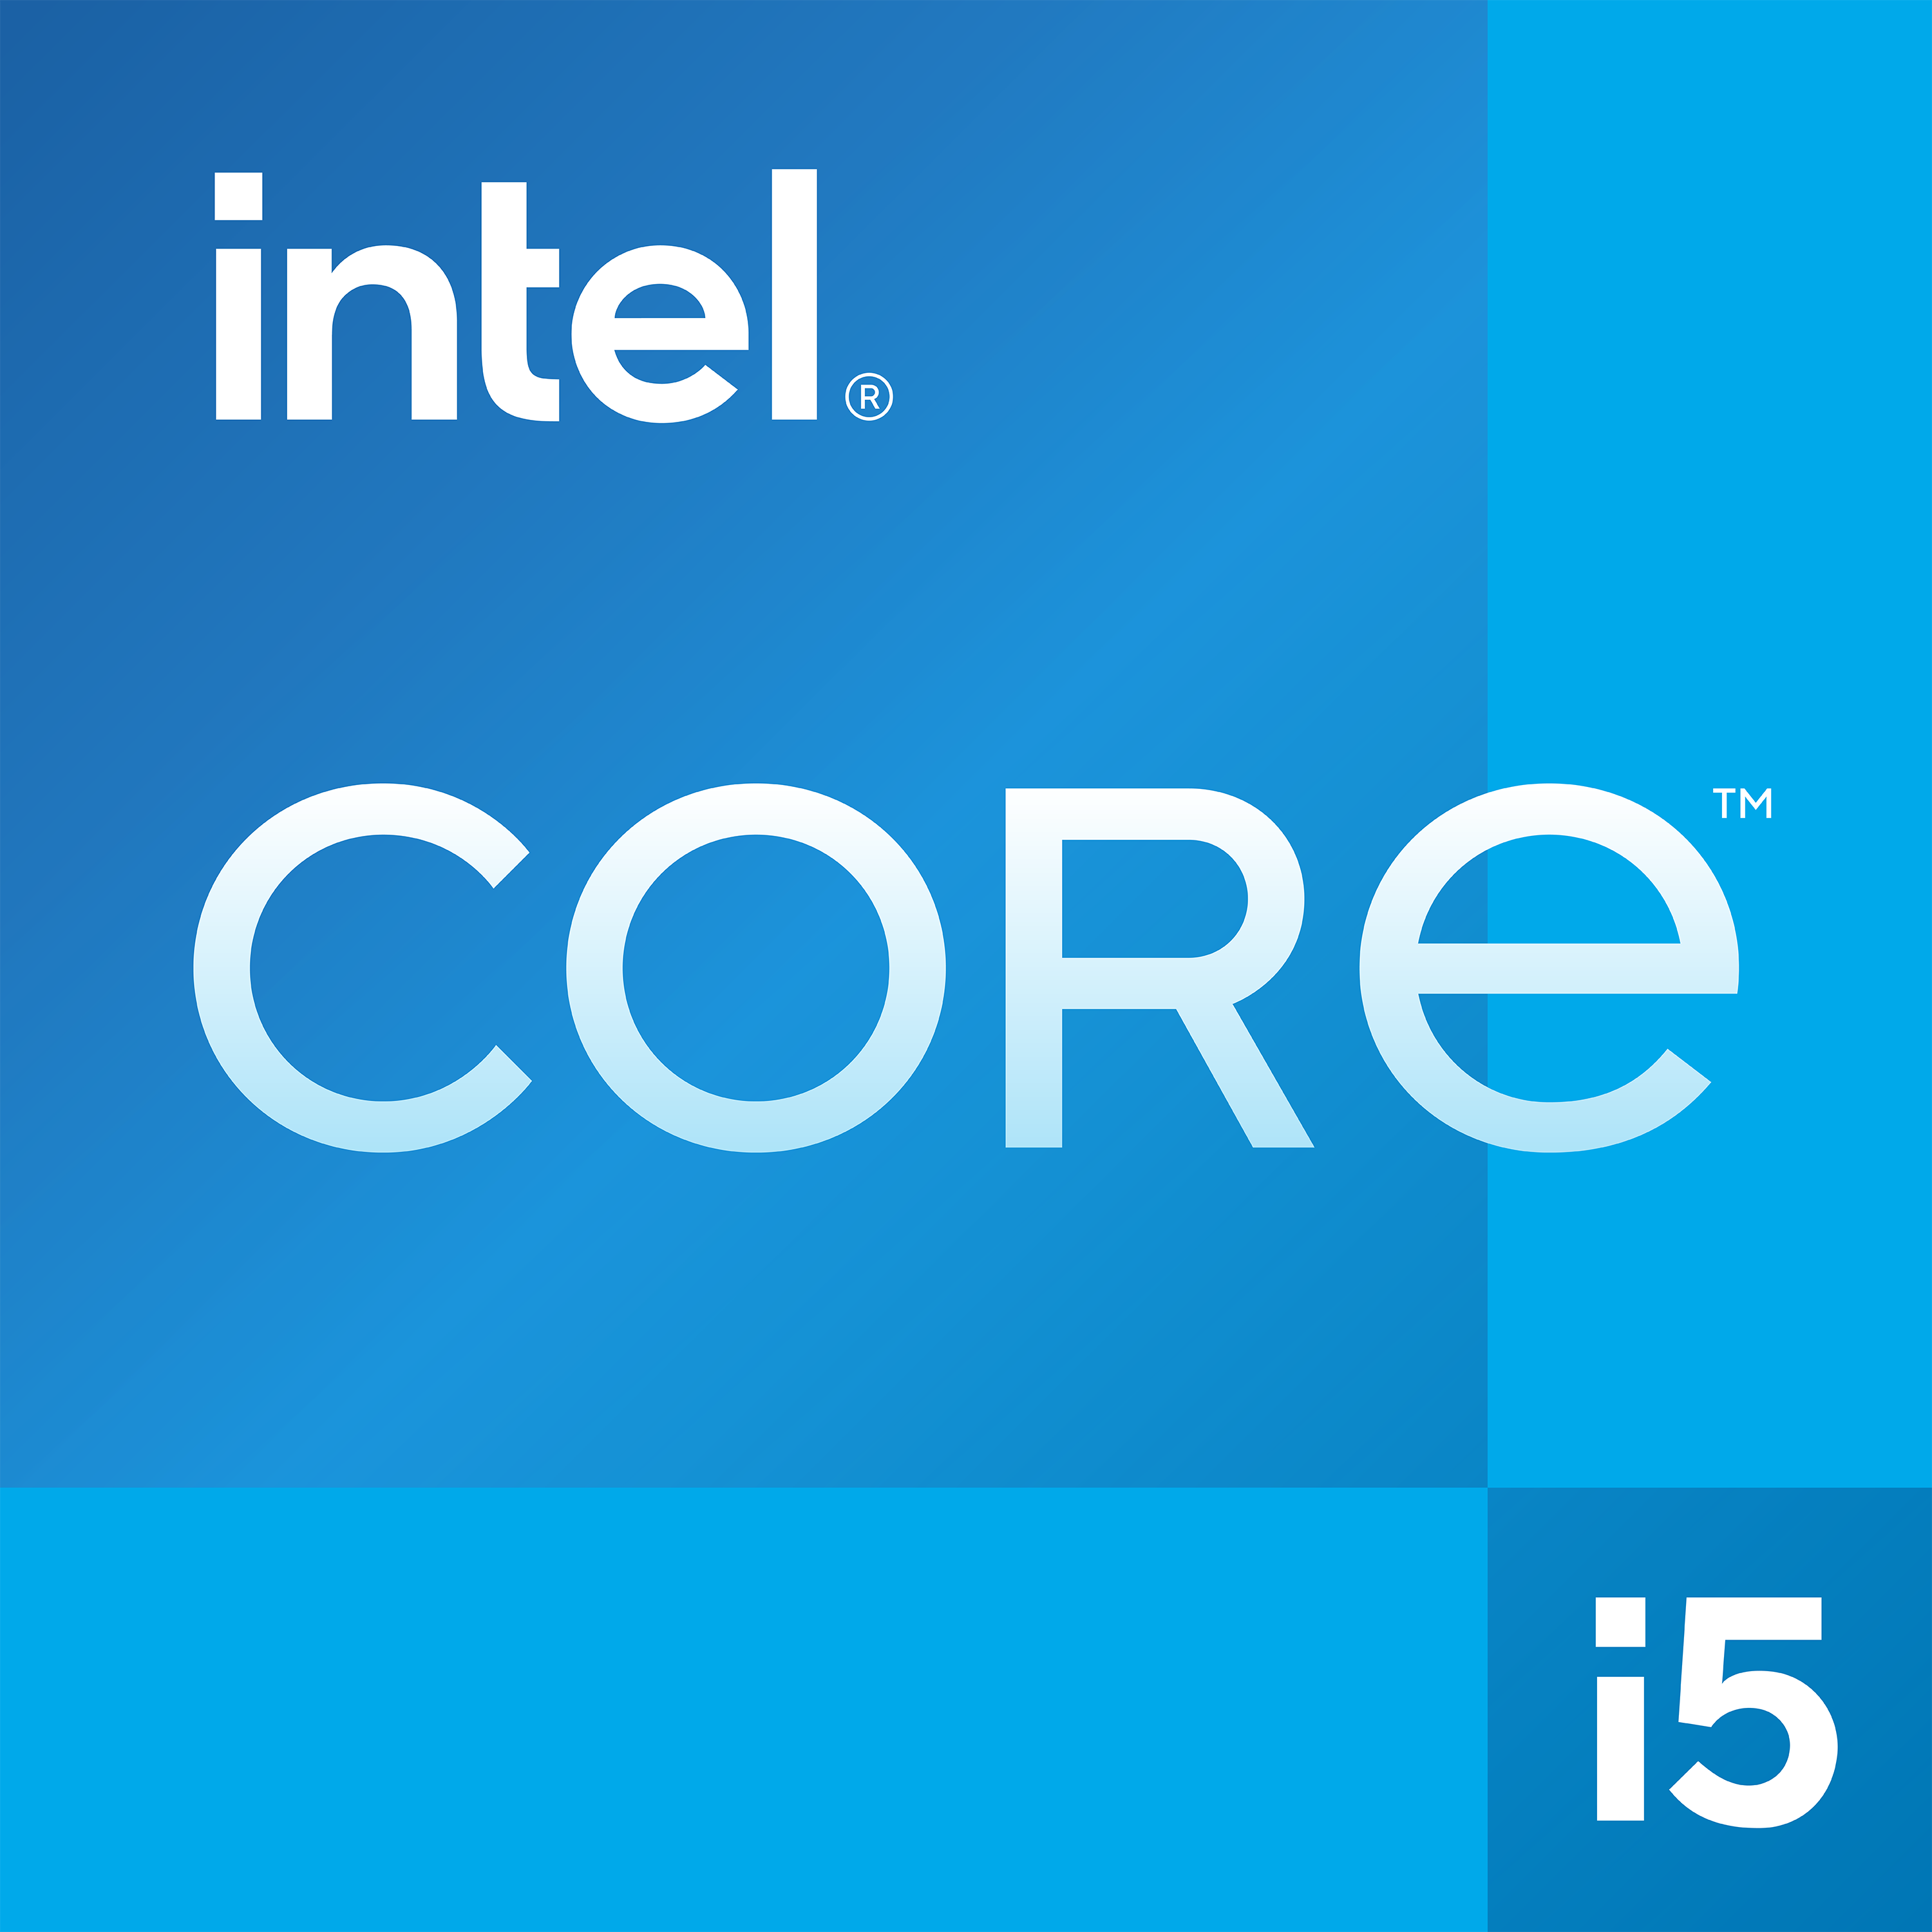 Intel i5 11th generation